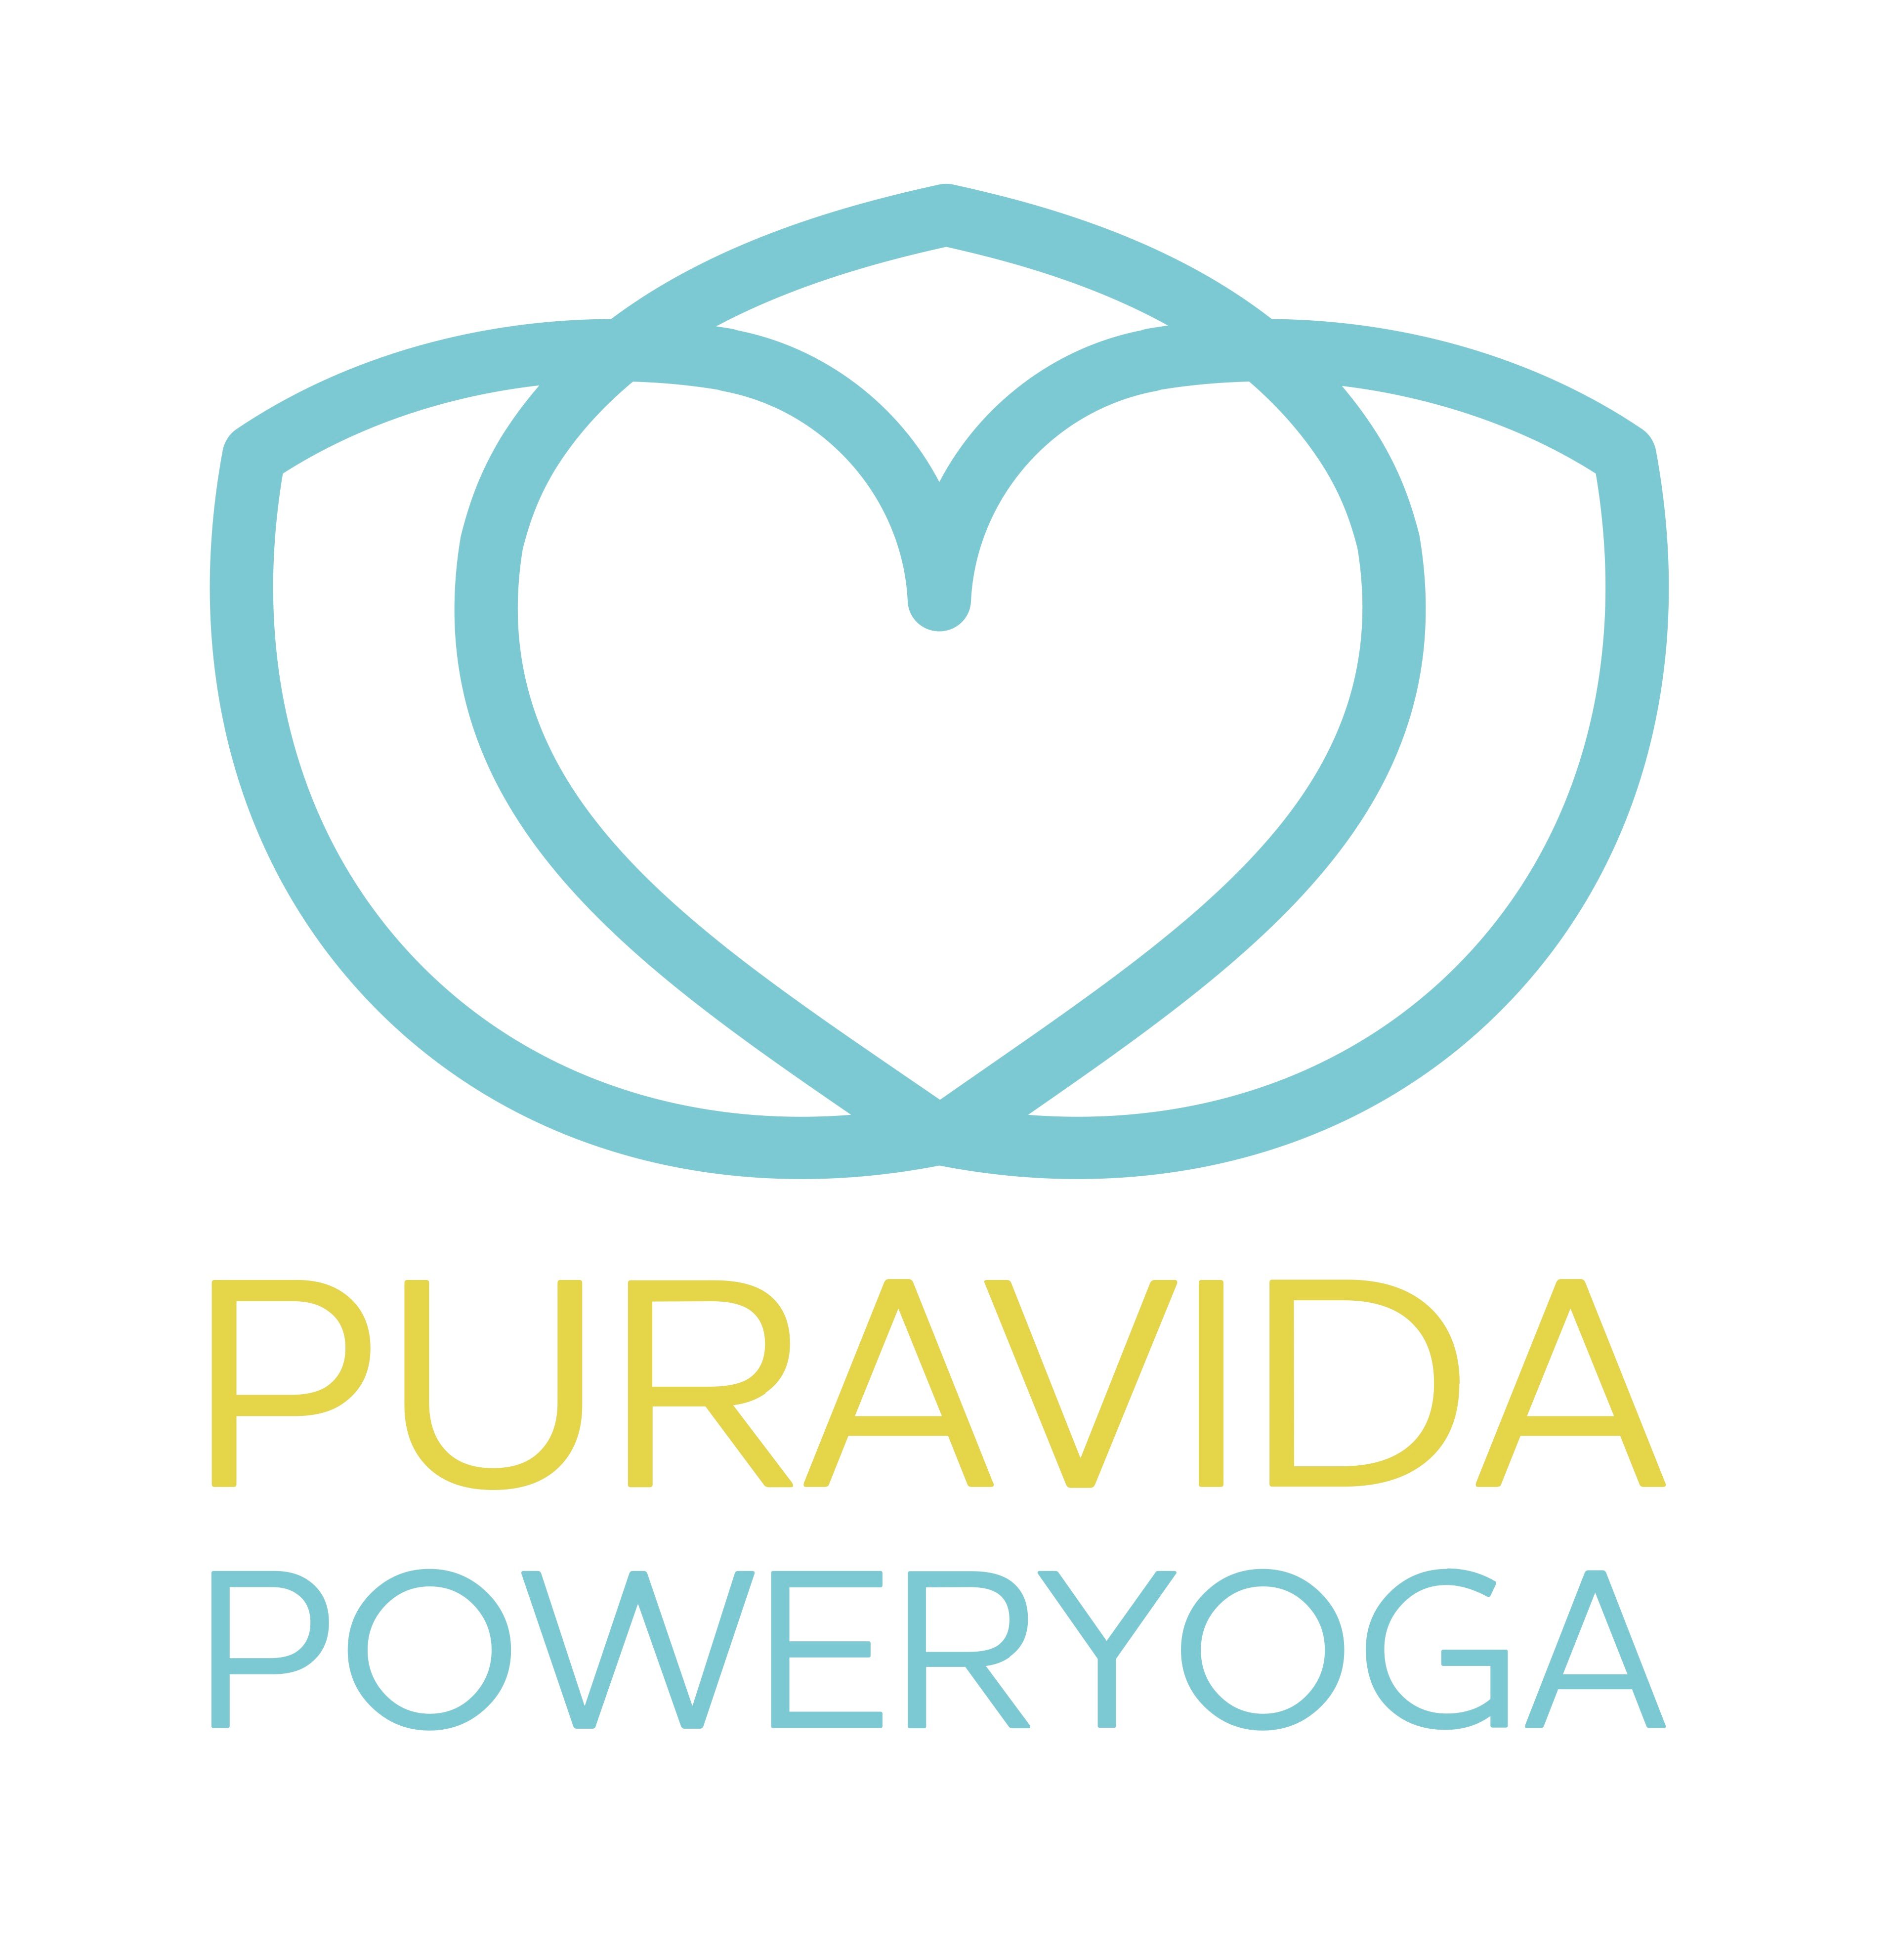 PuraVida Power Yoga